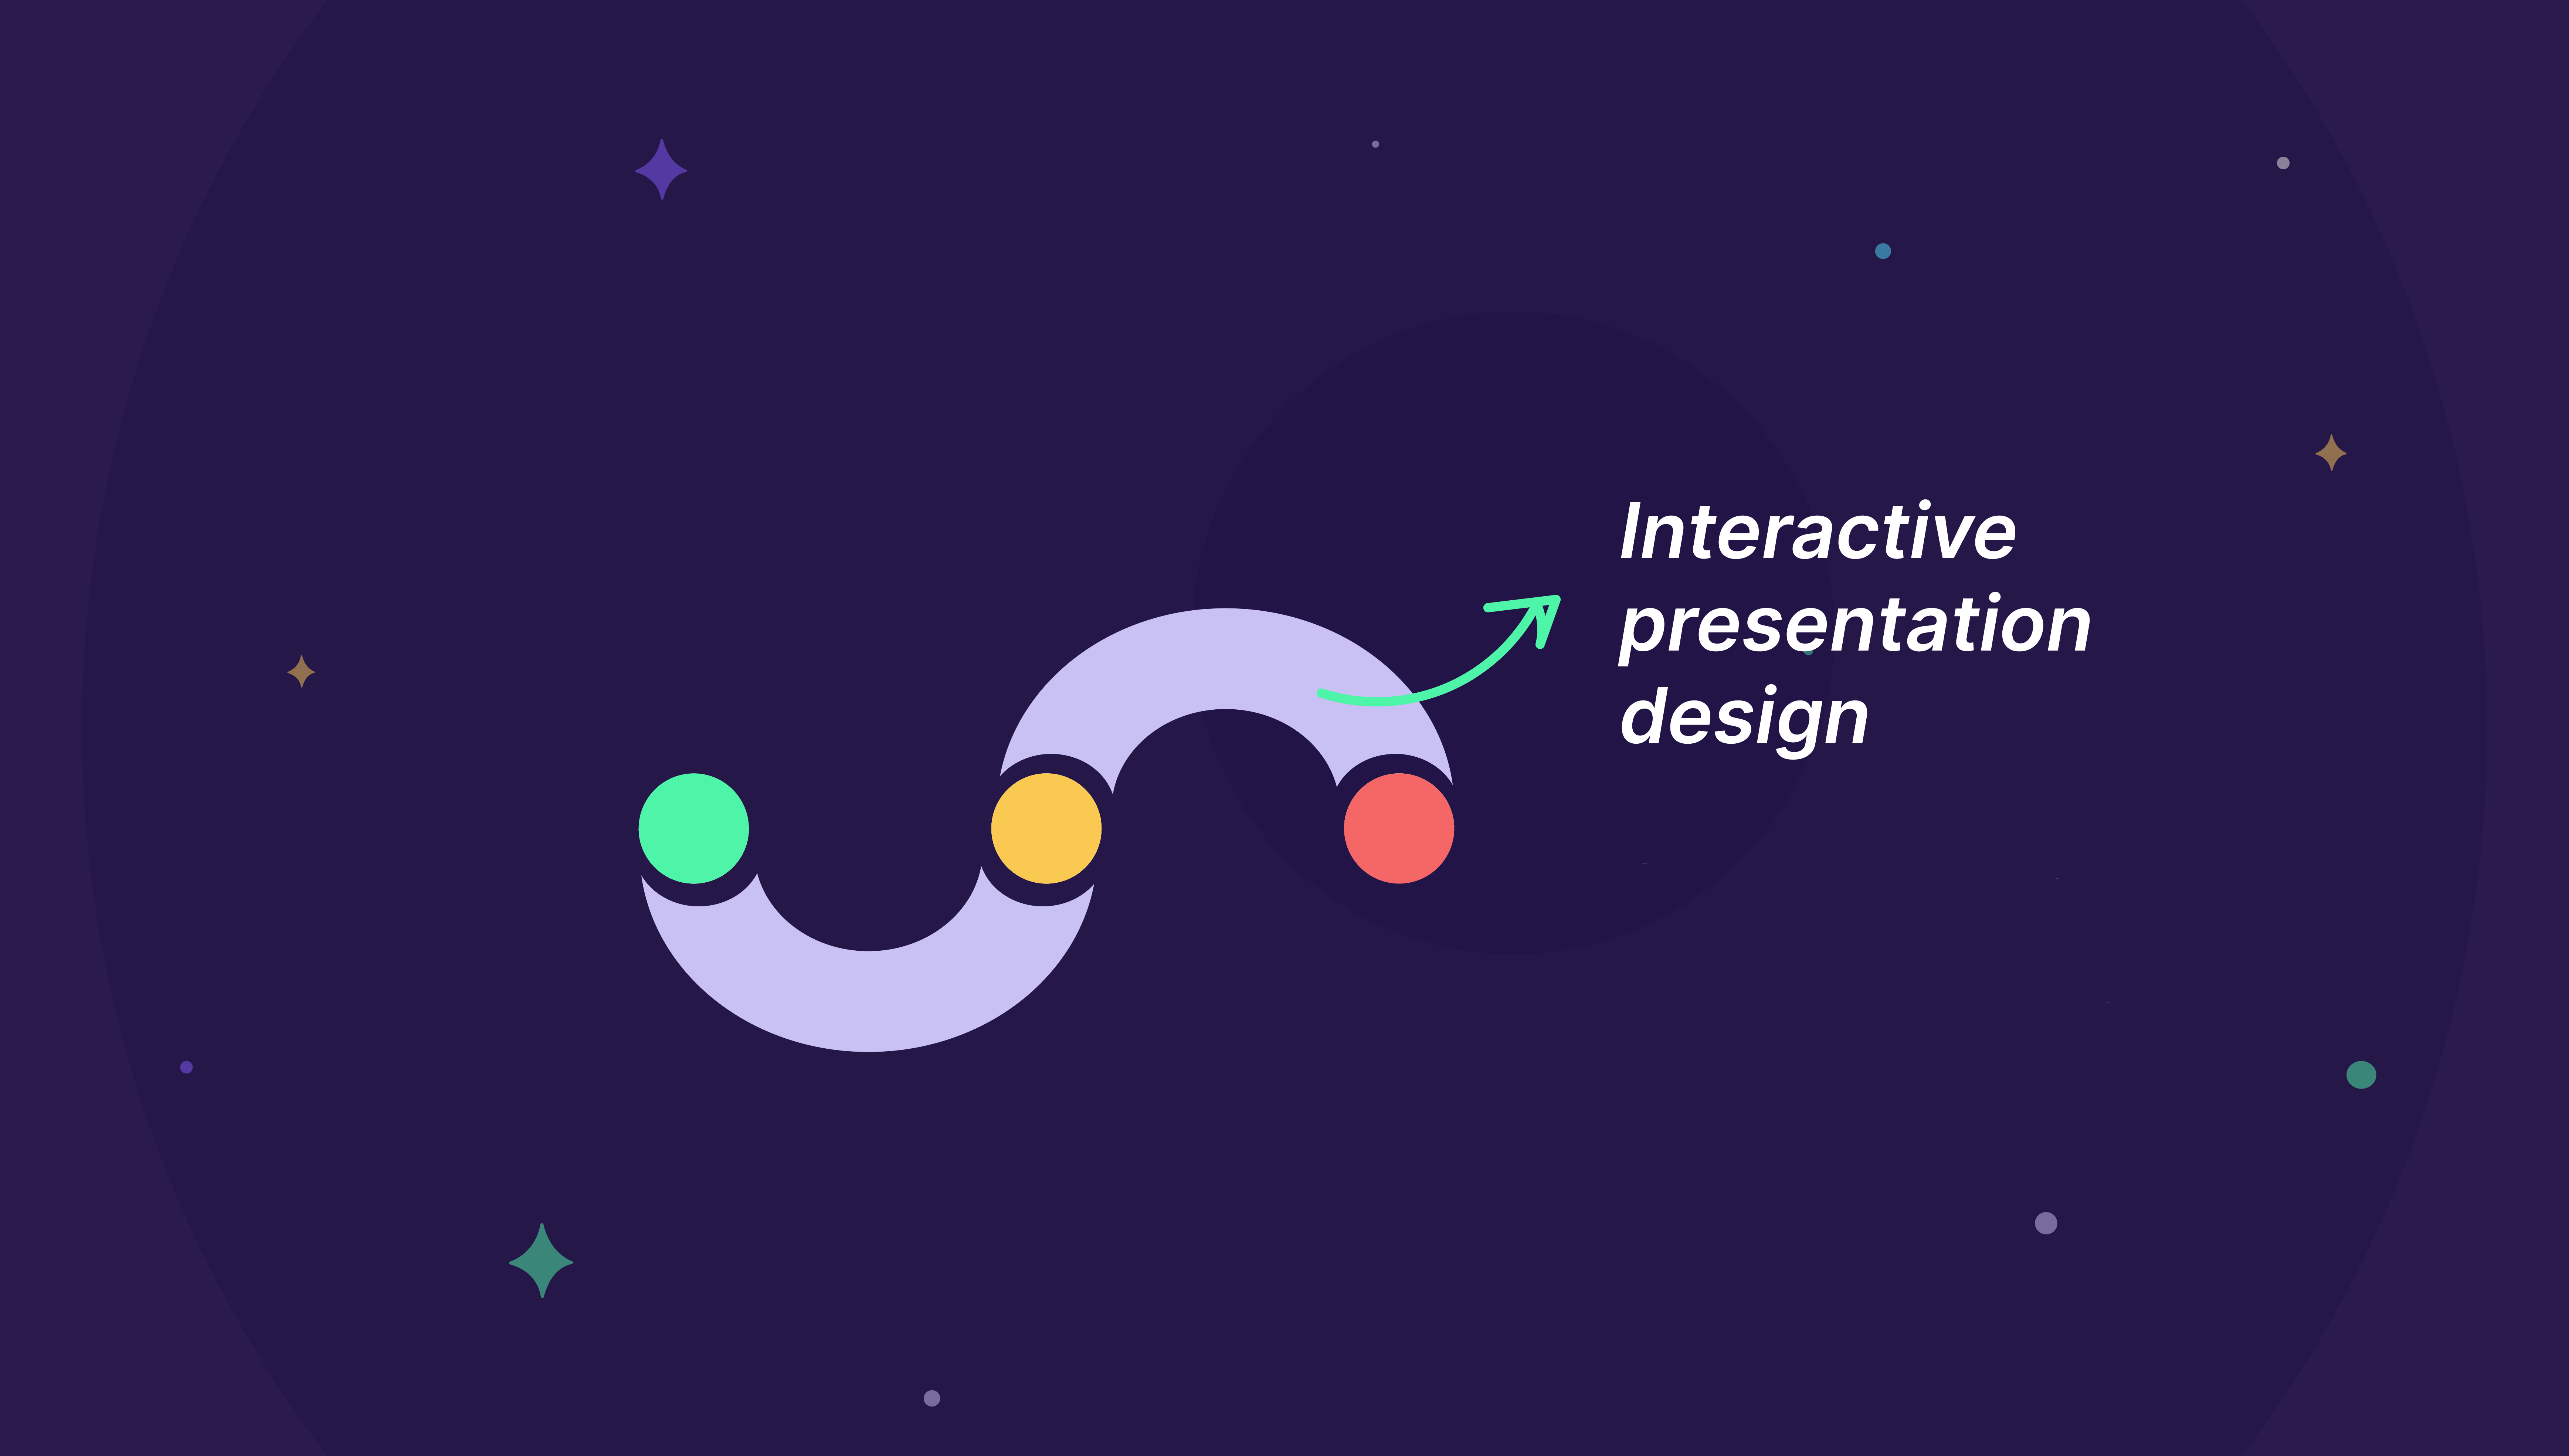 Interactive presentation design